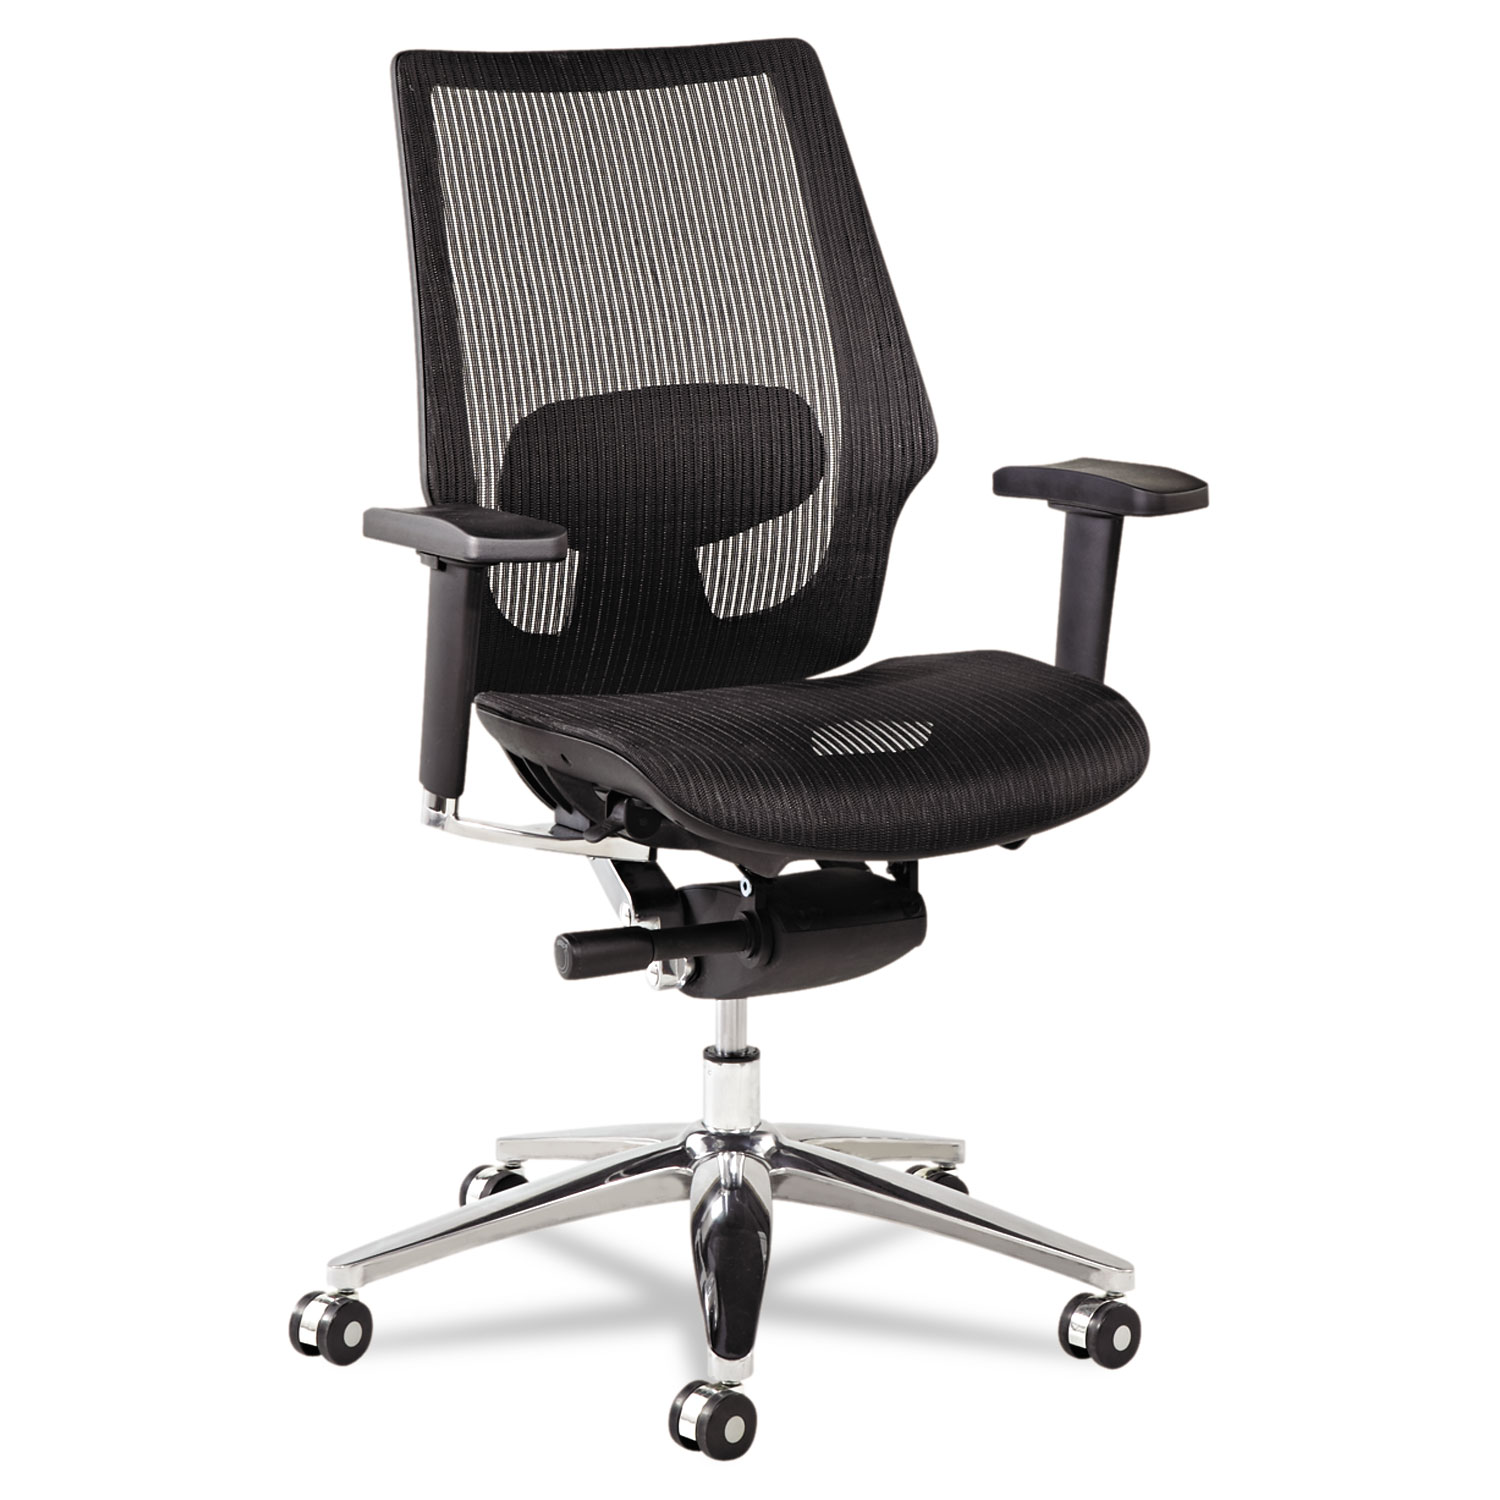  Alera ALEKE4218 Alera K8 Series Ergonomic Multifunction Mesh Chair, Supports up to 275 lbs., Black Seat/Black Back, Aluminum Base (ALEKE4218) 